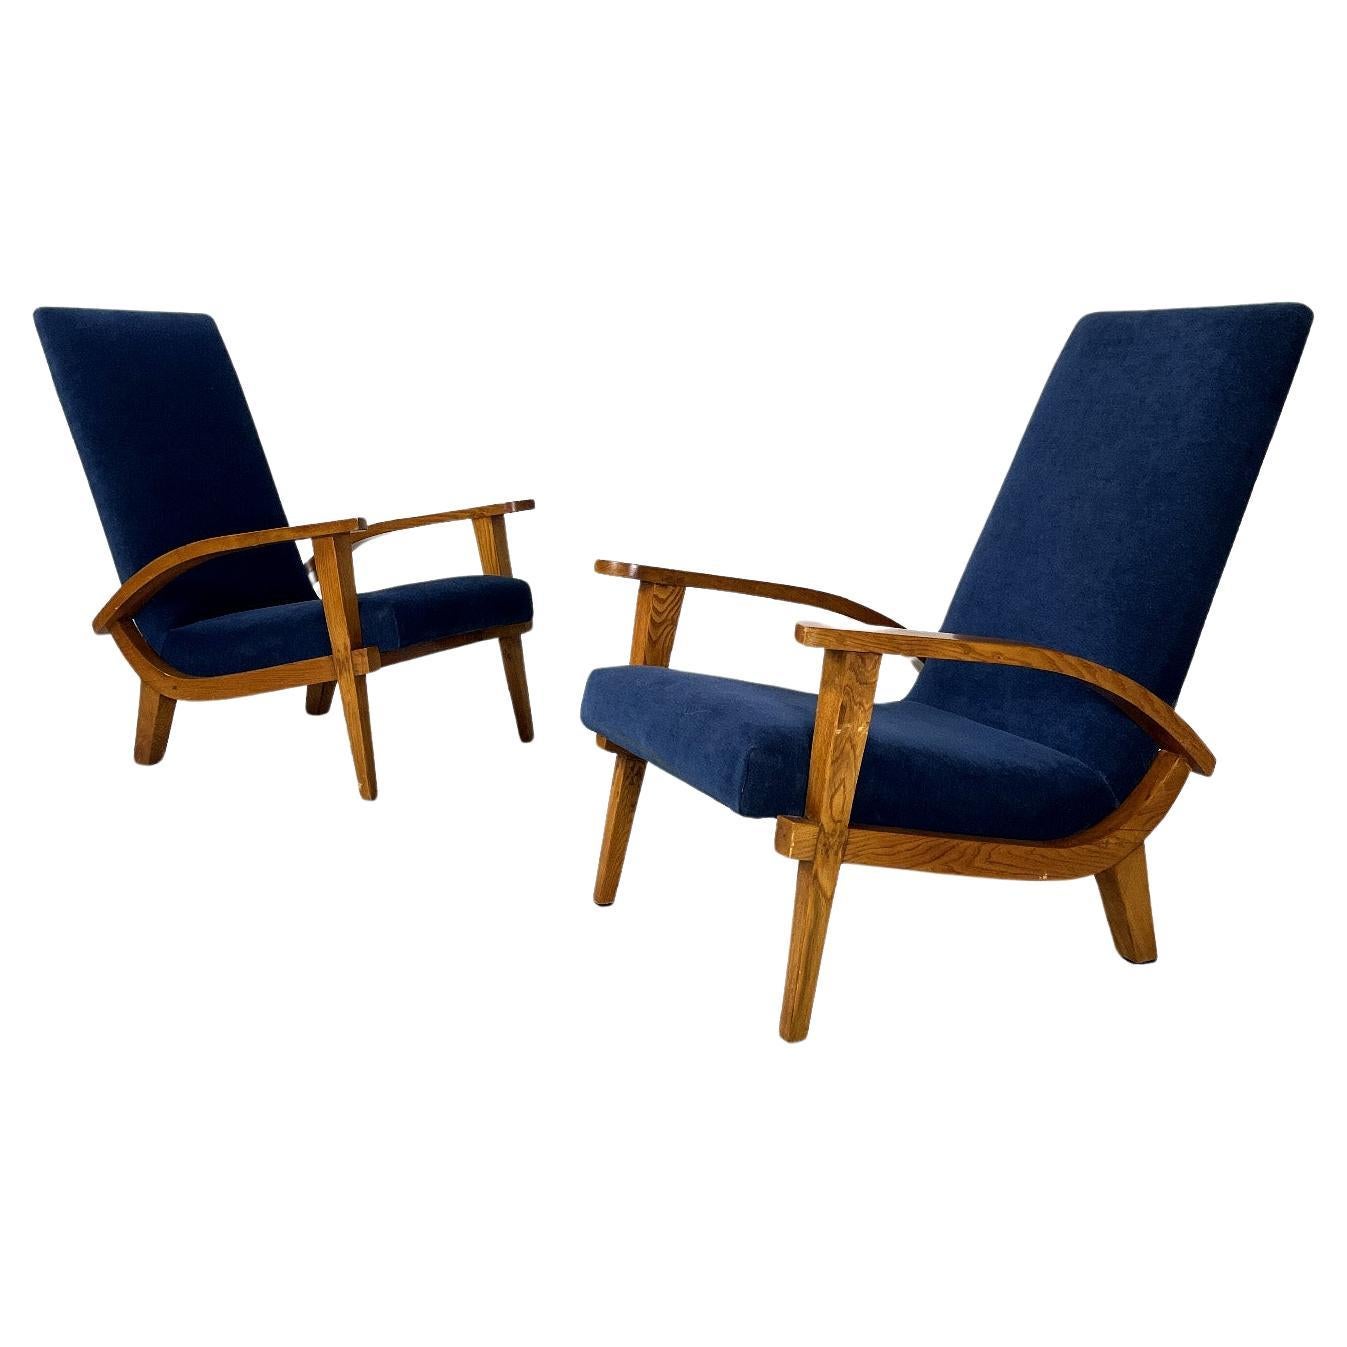 Italian mid-century modern wood and blue fabric armchairs, 1950s